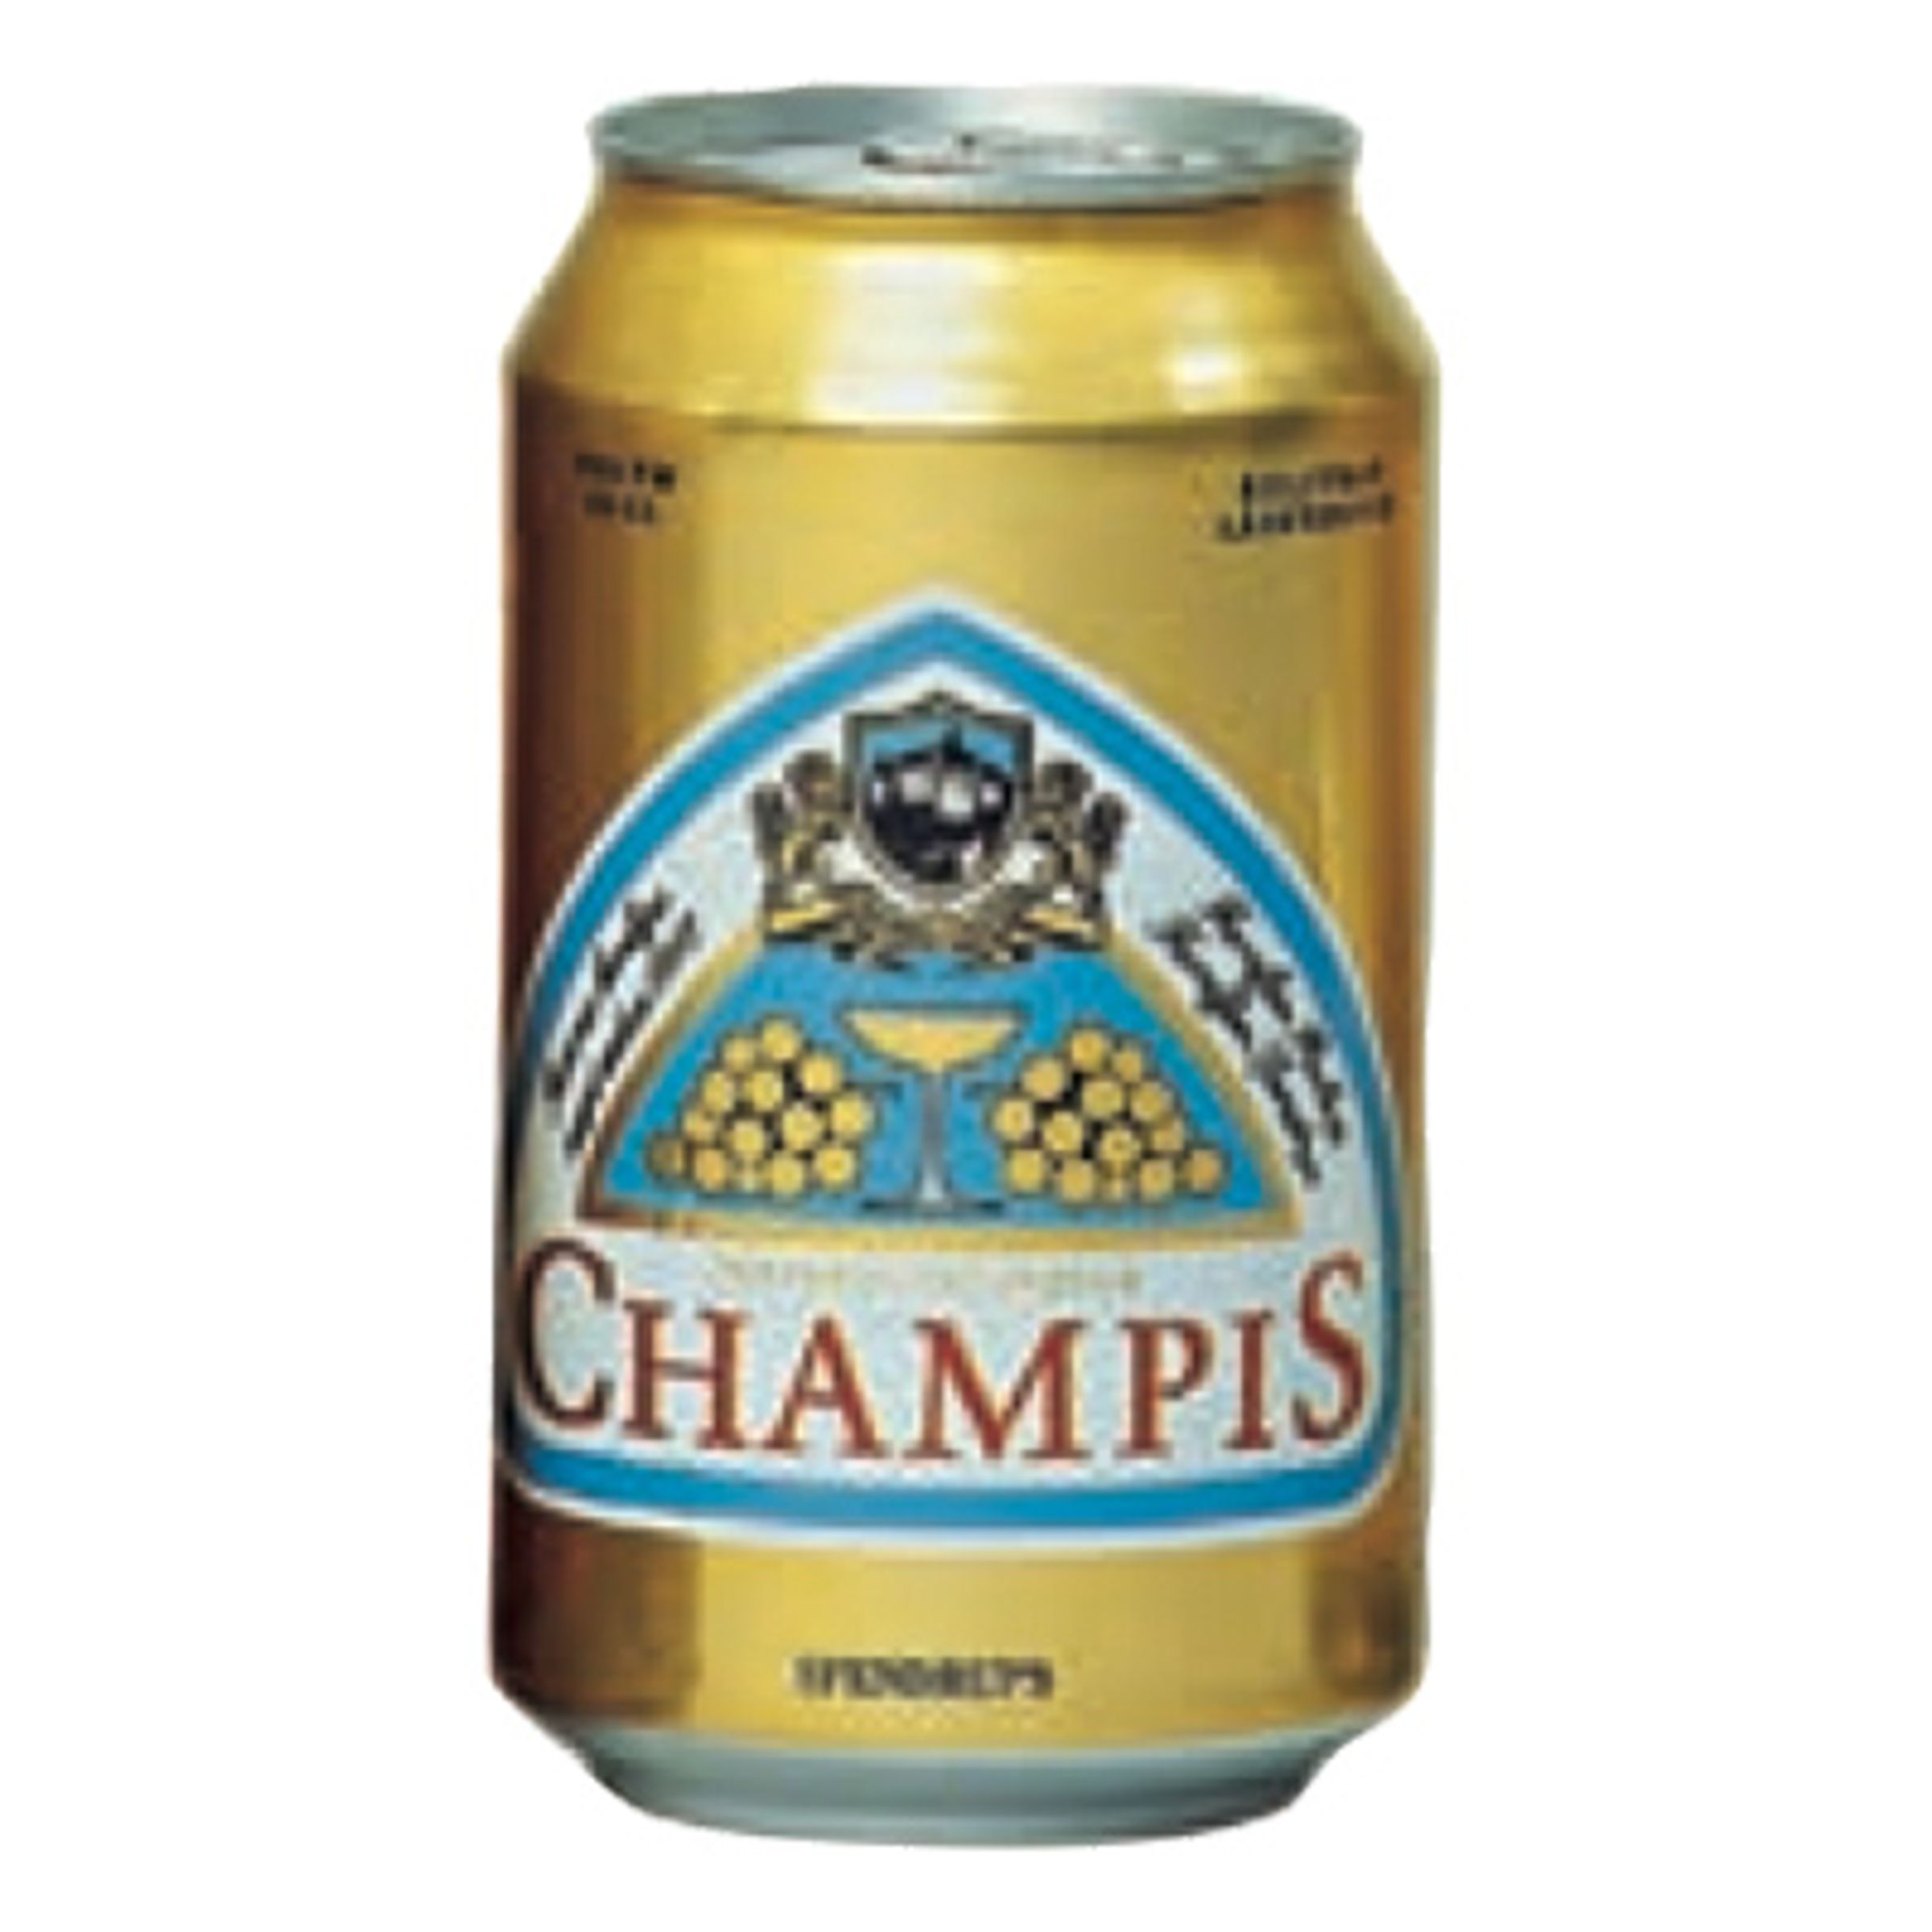 Champis - 1-pack